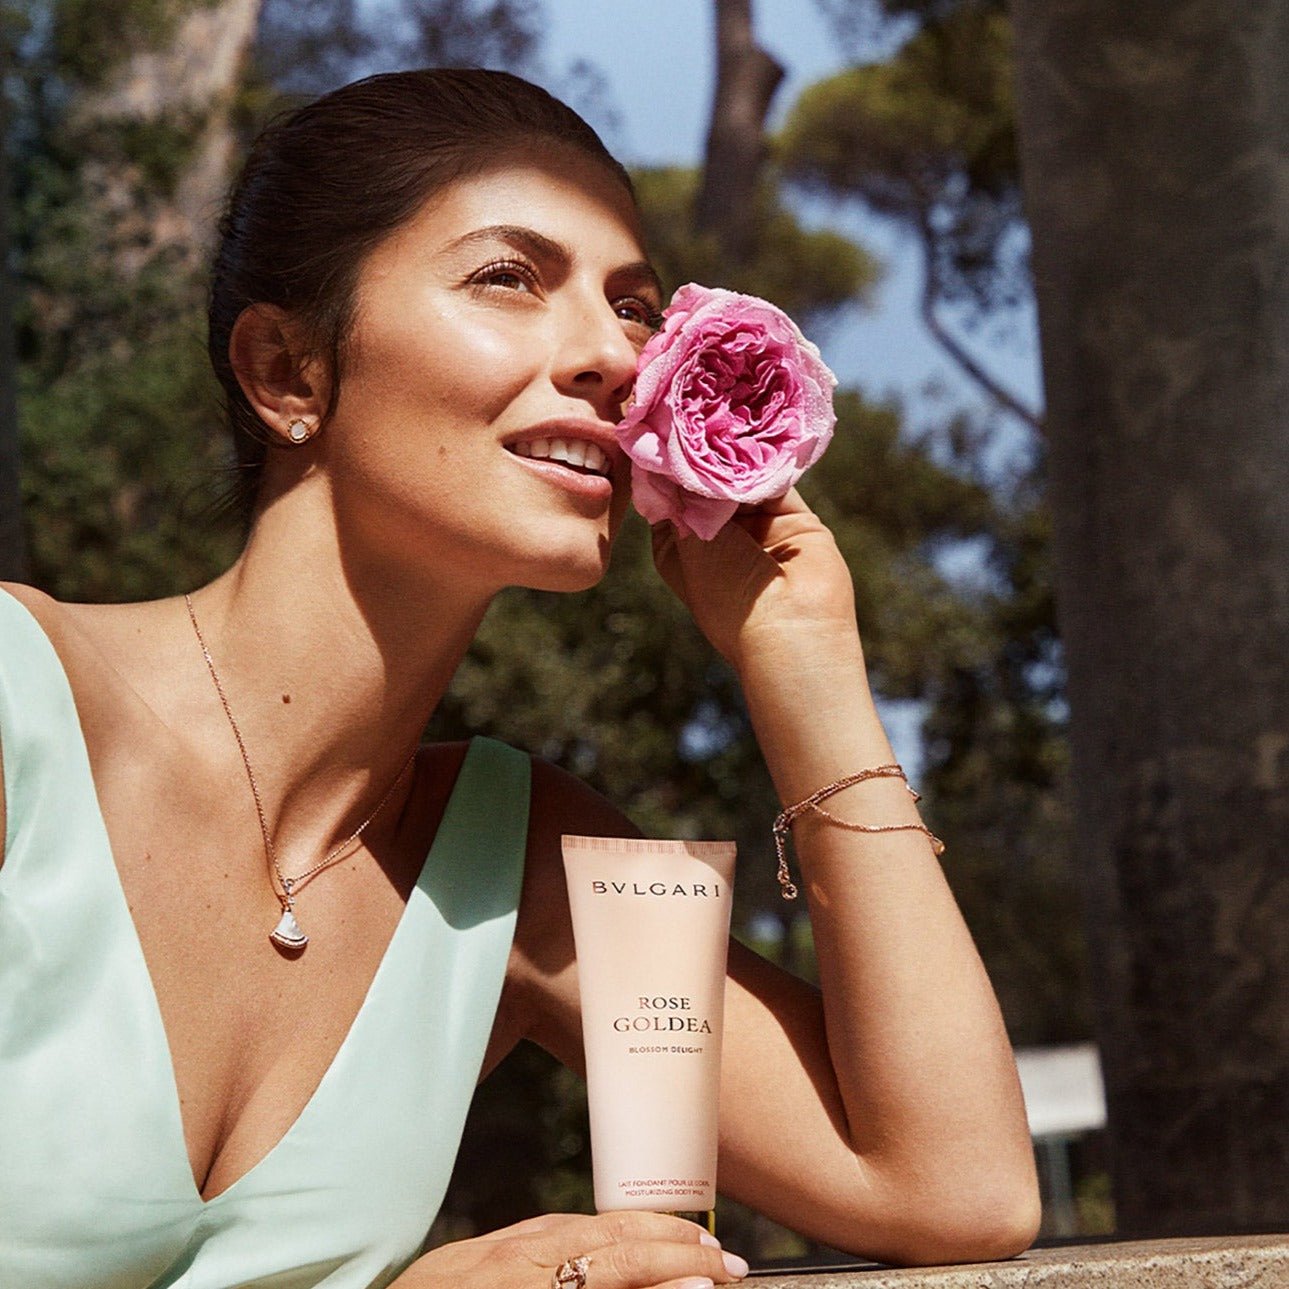 Bvlgari Rose Goldea Blossom Delight Moisturizing Body Milk | My Perfume Shop Australia